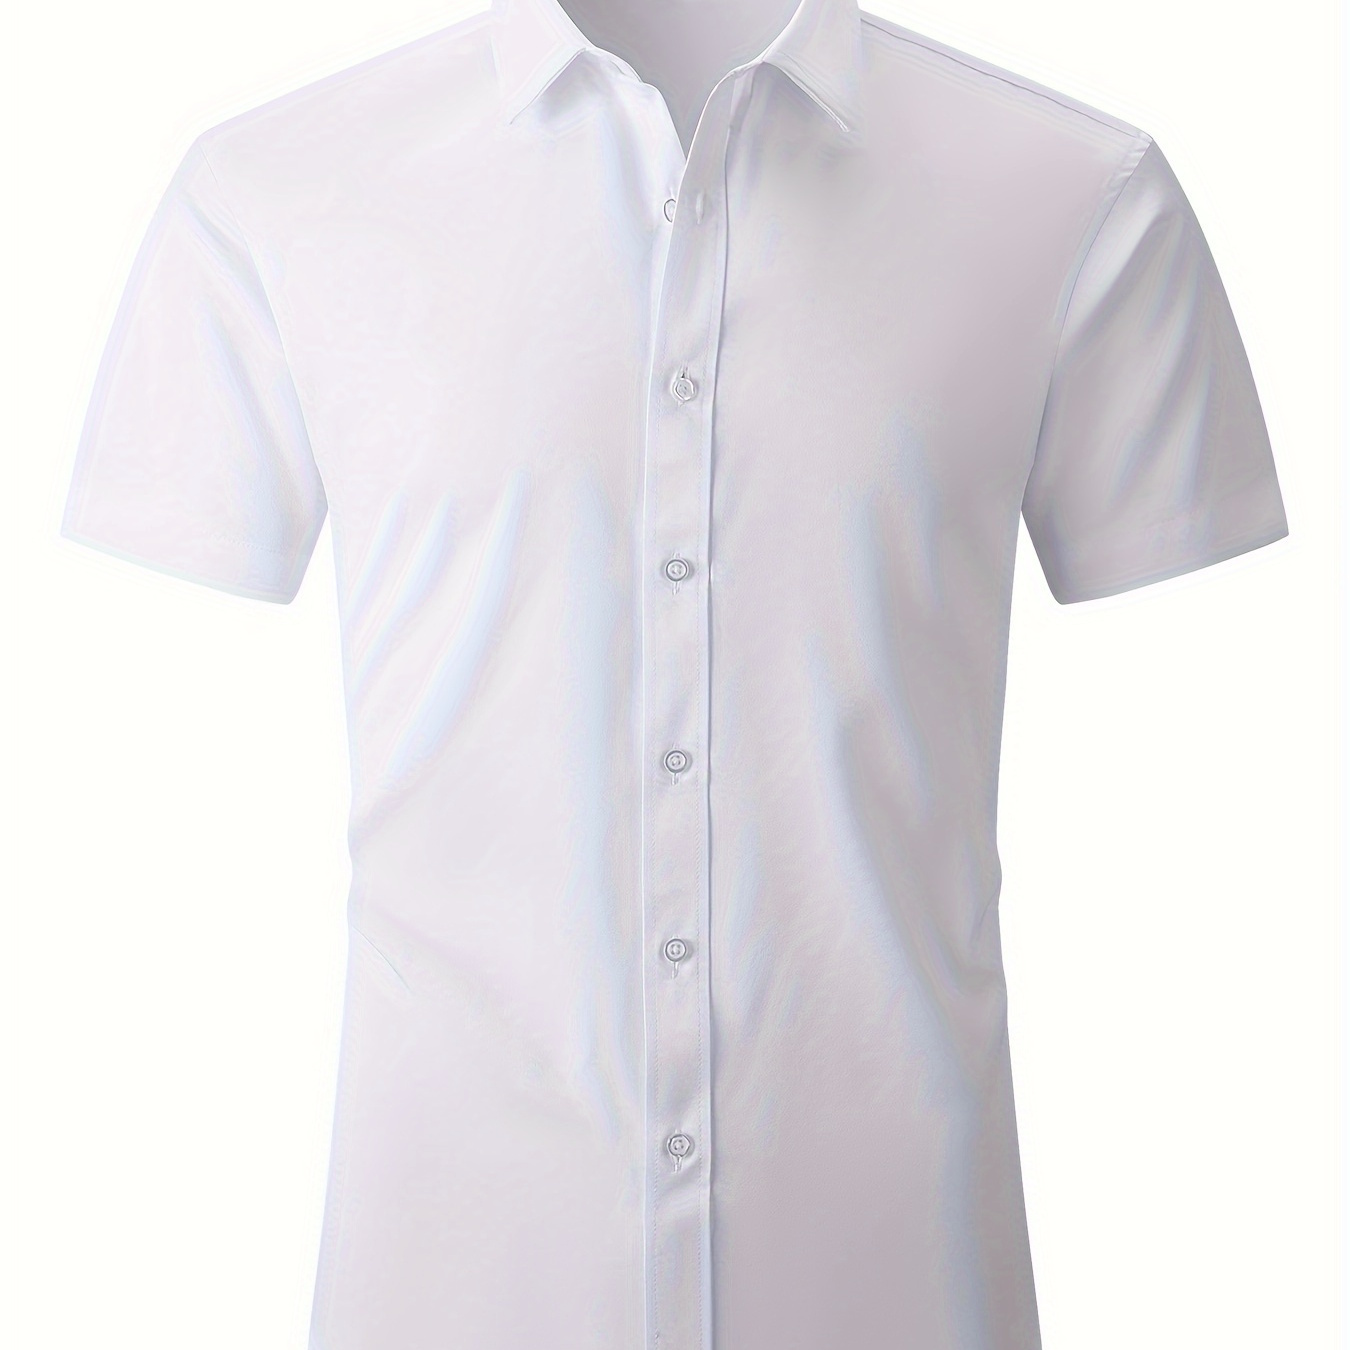 

Men's Summer Fashion Business-casual Shirt, Short Sleeve High-quality Mature Style Premium Button Up Lapel Shirt, Formal Dress